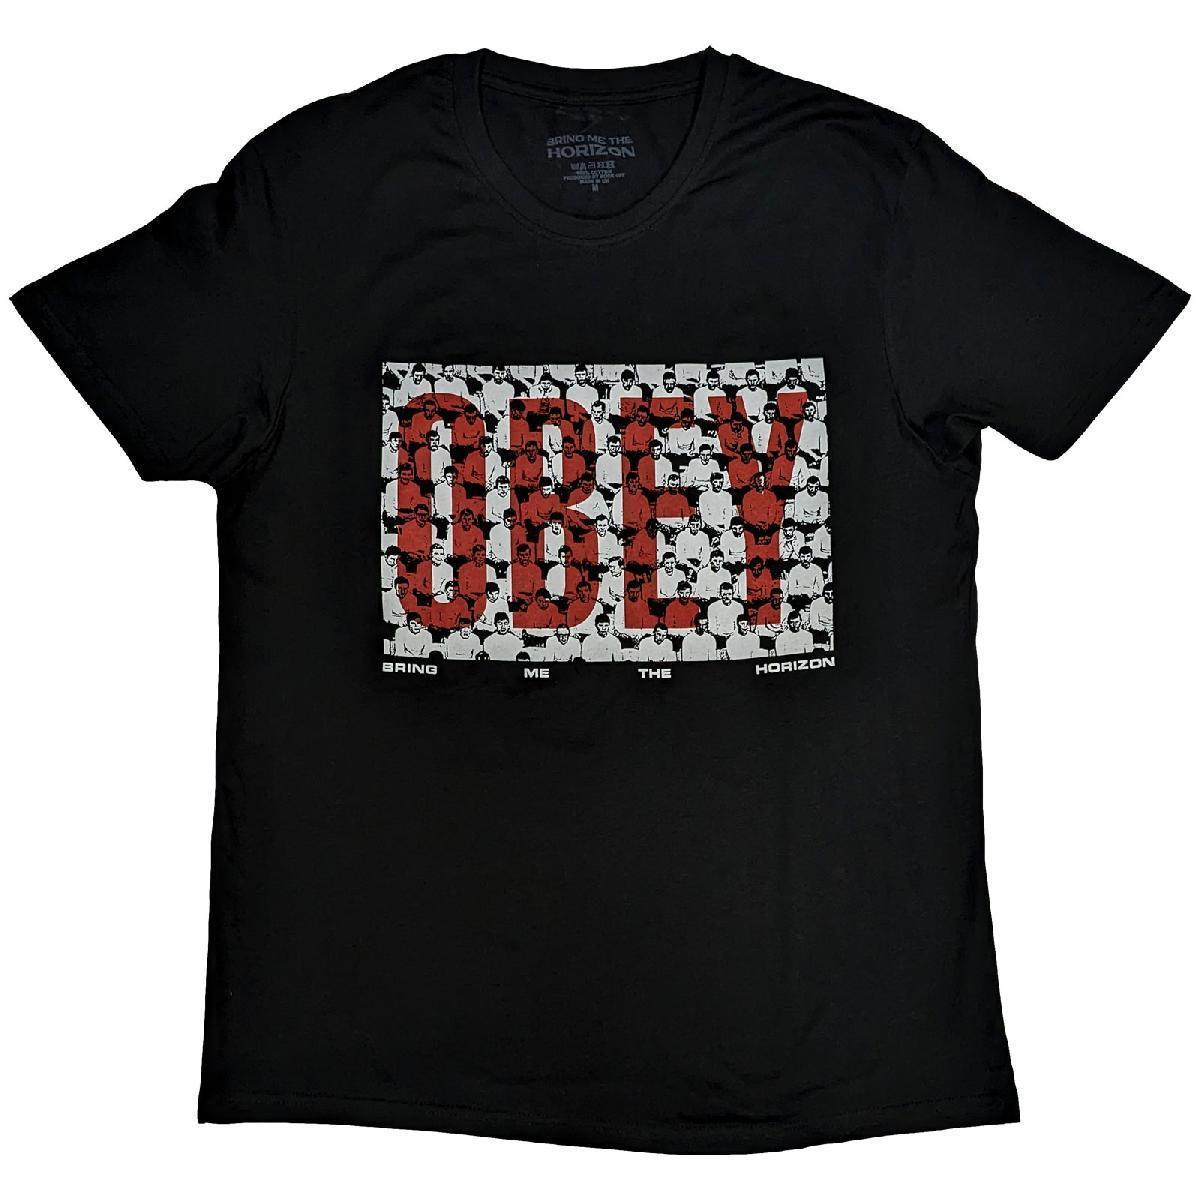 Bring Me The Horizon Unisex Adult Obey T-Shirt (Black) (XL)